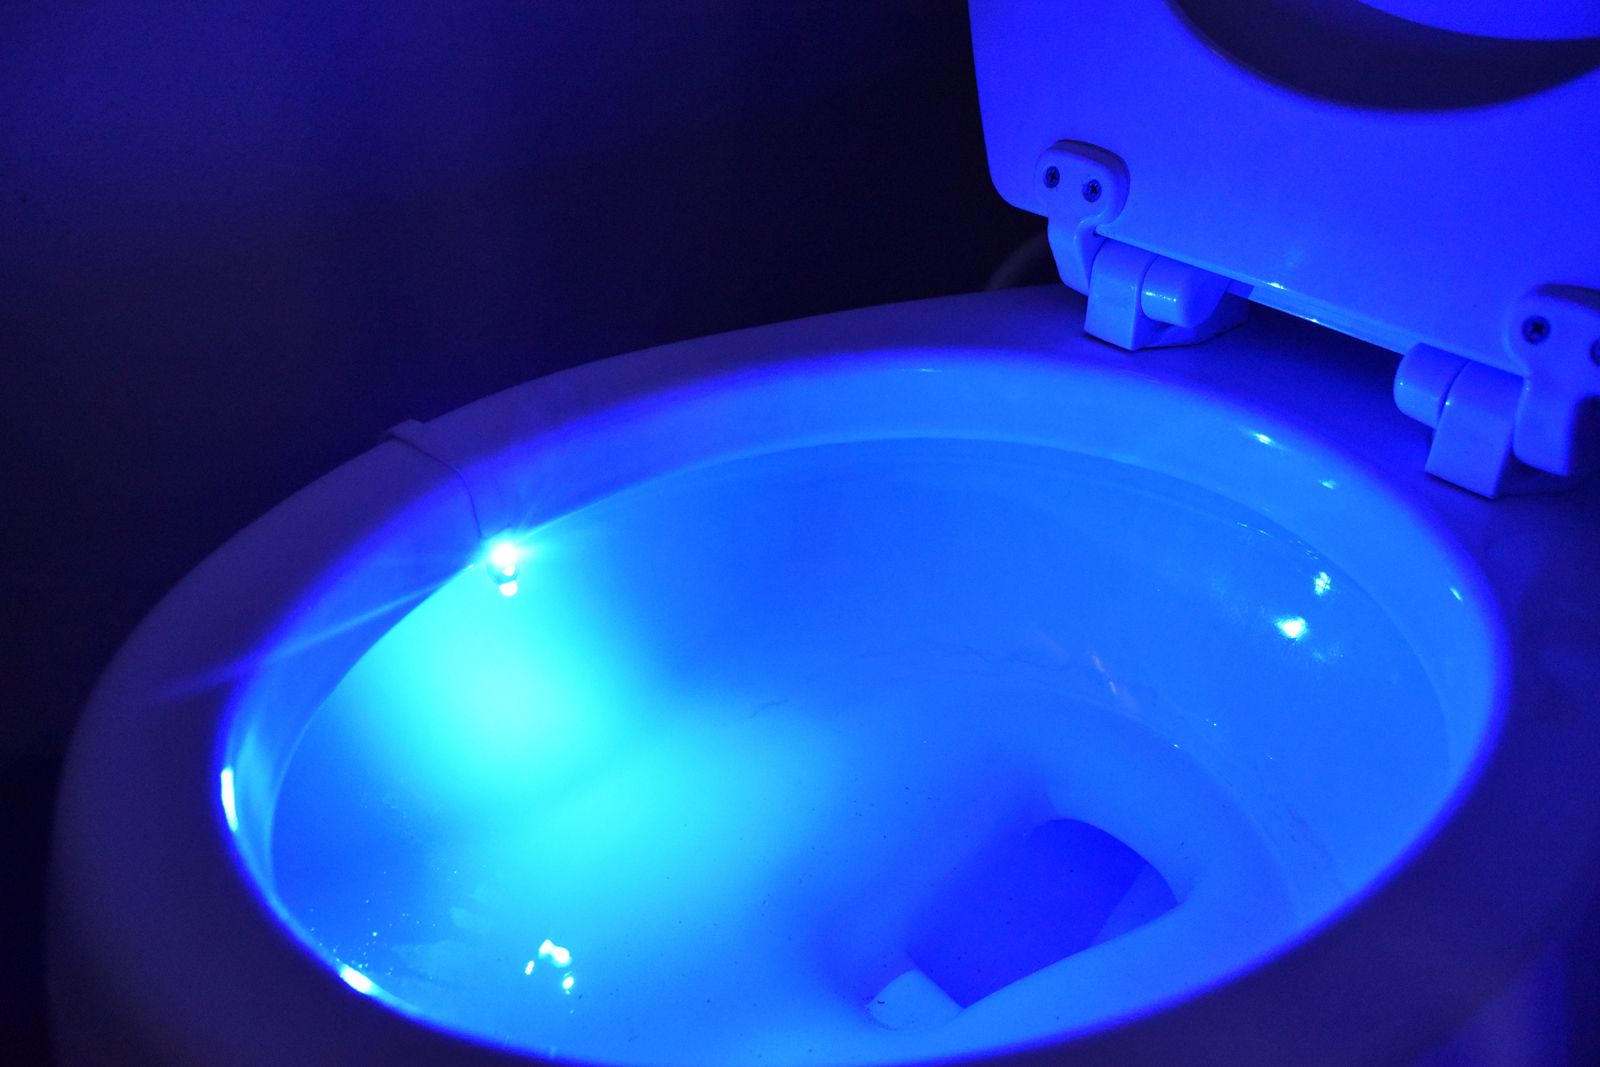 🔶Top 10 Best Toilet Bowl Lights in 2023 Reviews 